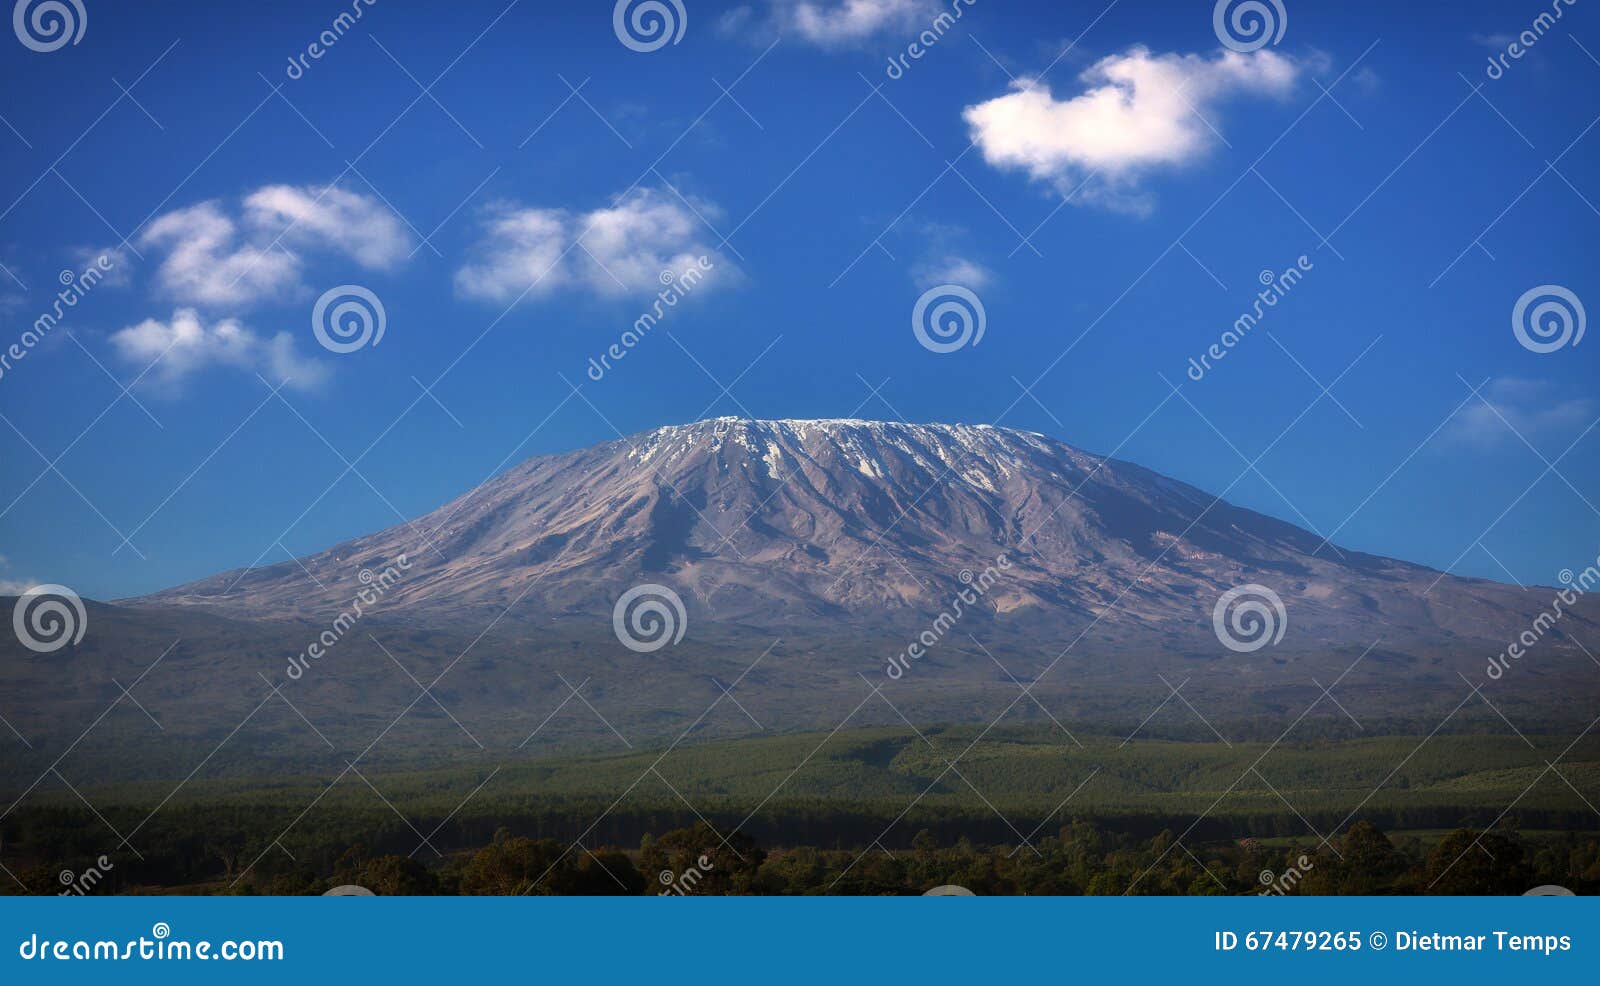 mount kilimanjaro, tanzania